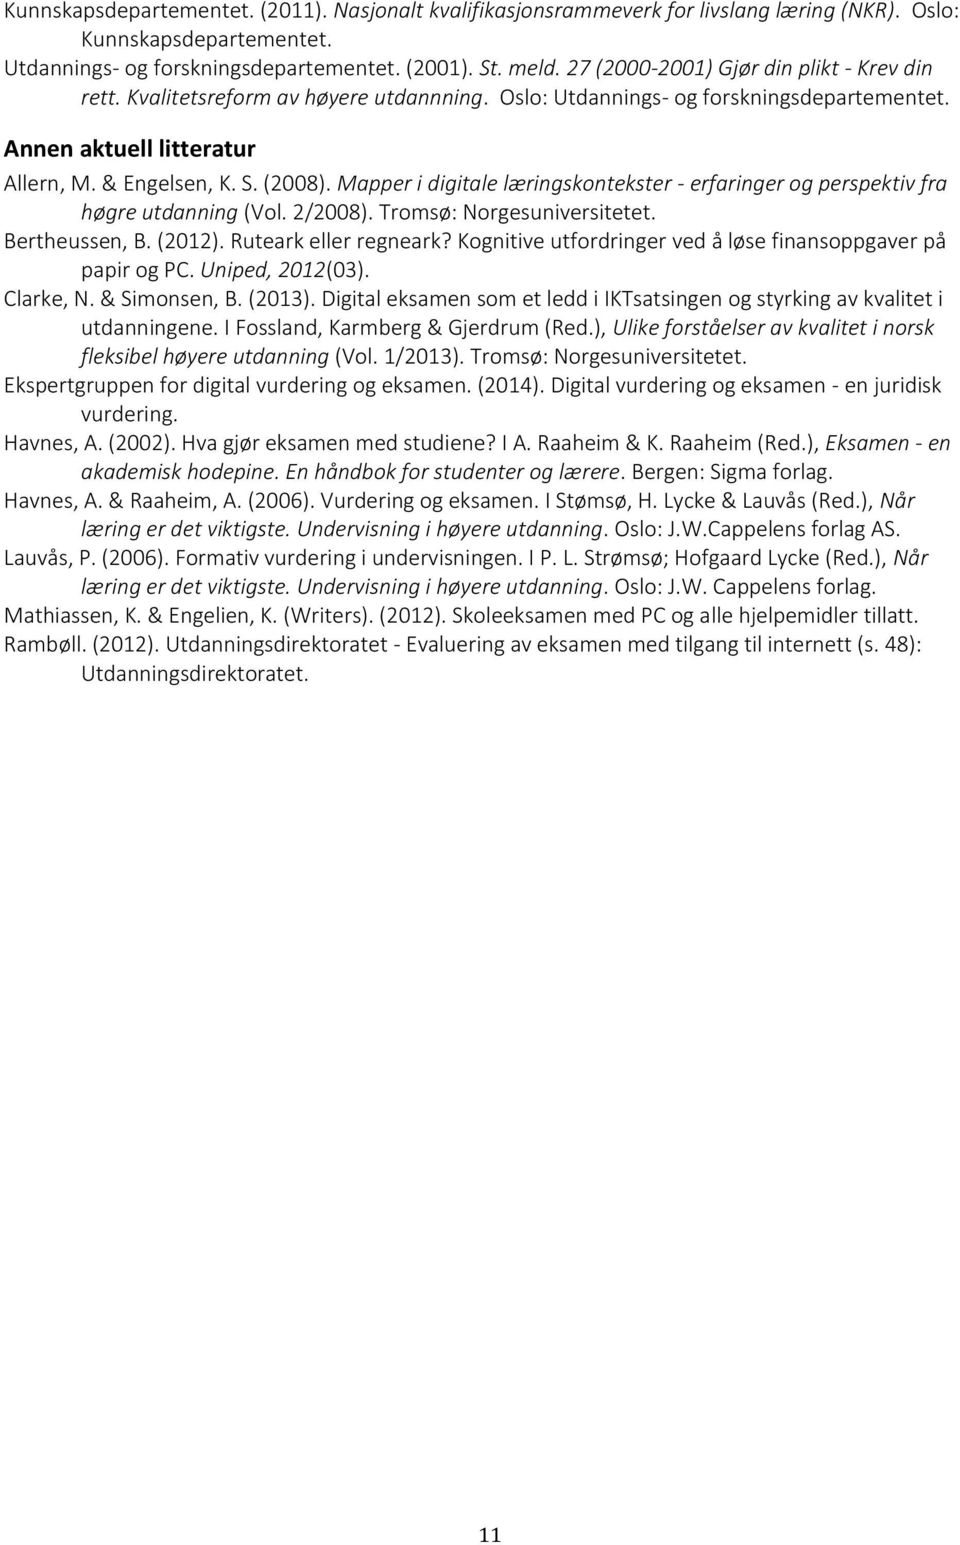 Mapper i digitale læringskontekster - erfaringer og perspektiv fra høgre utdanning (Vol. 2/2008). Tromsø: Norgesuniversitetet. Bertheussen, B. (2012). Ruteark eller regneark?